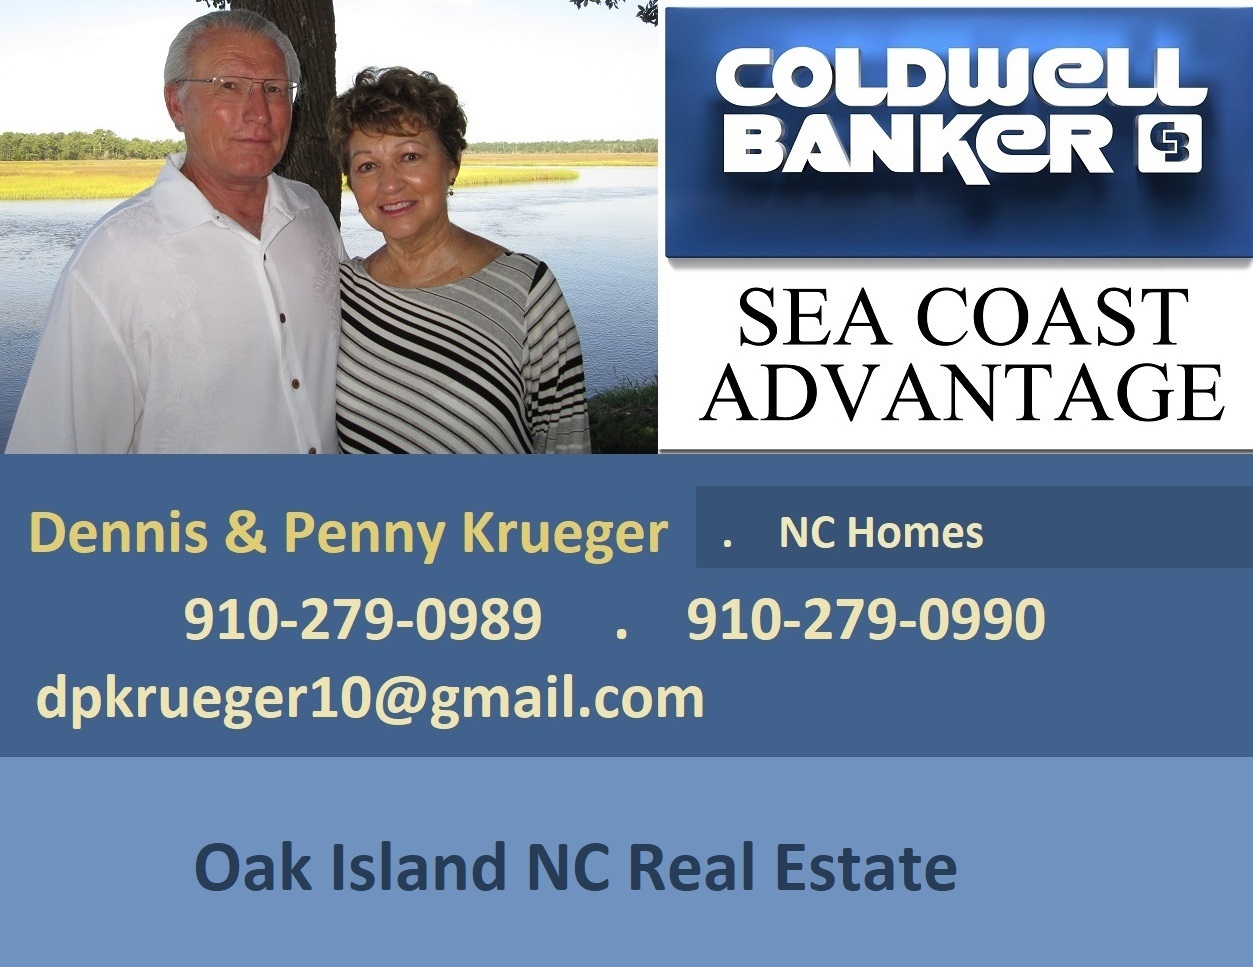 Oak Island NC Real Estate Krueger Team photos